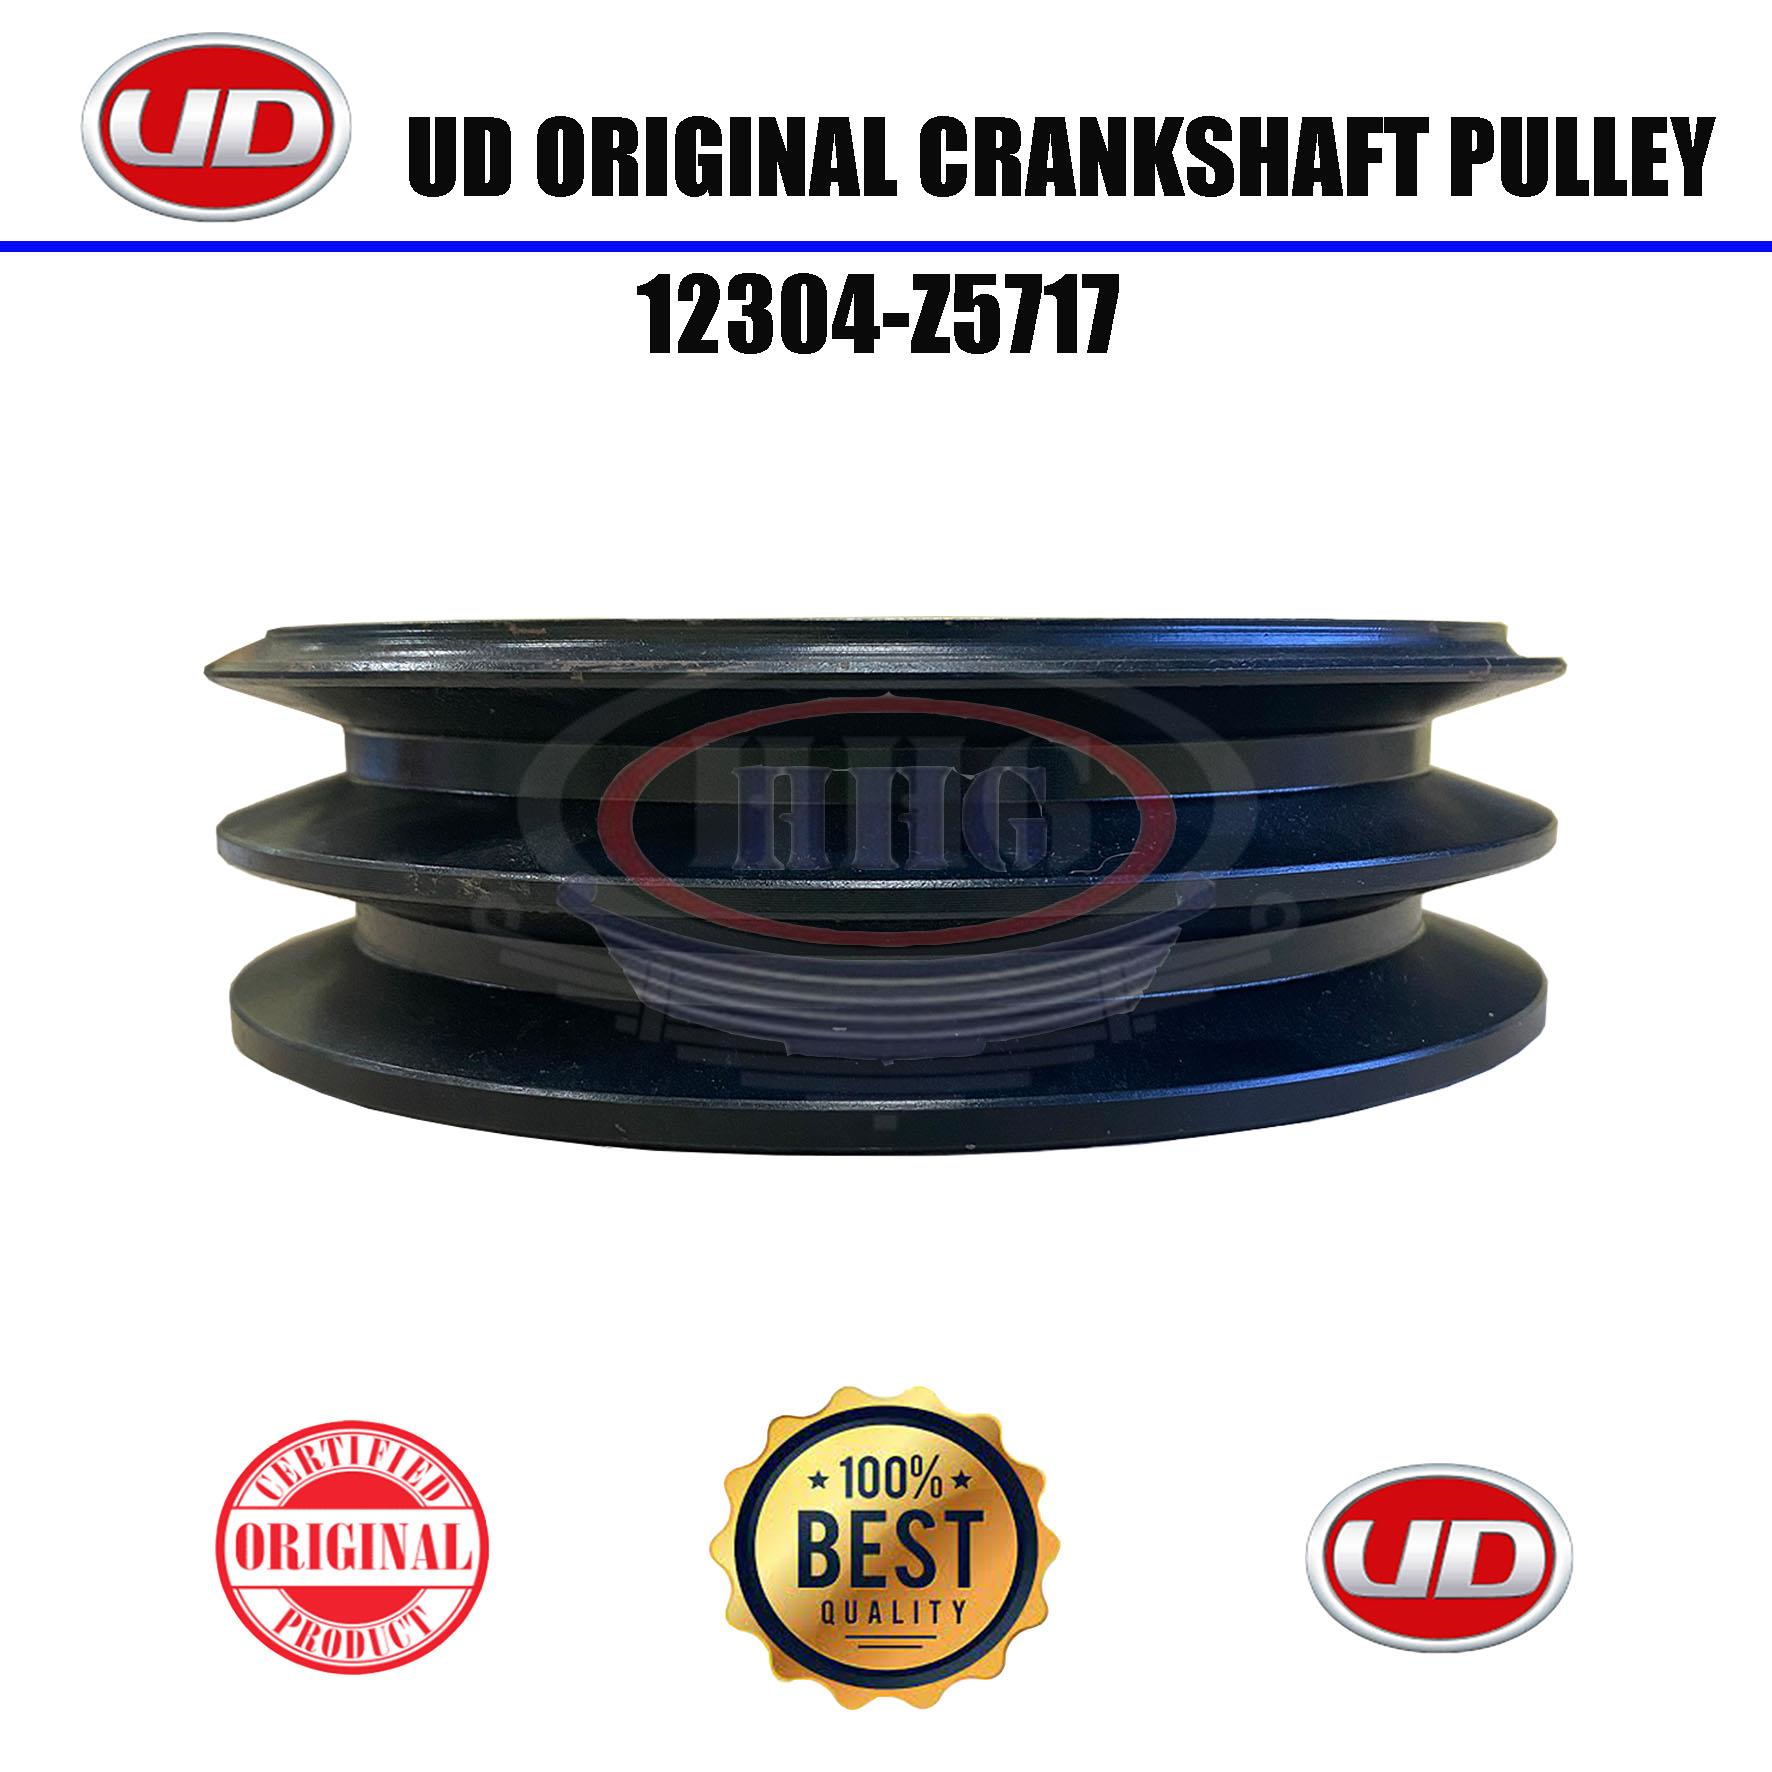 UD Original FE6T Crankshaft Pulley (12304-Z5717)